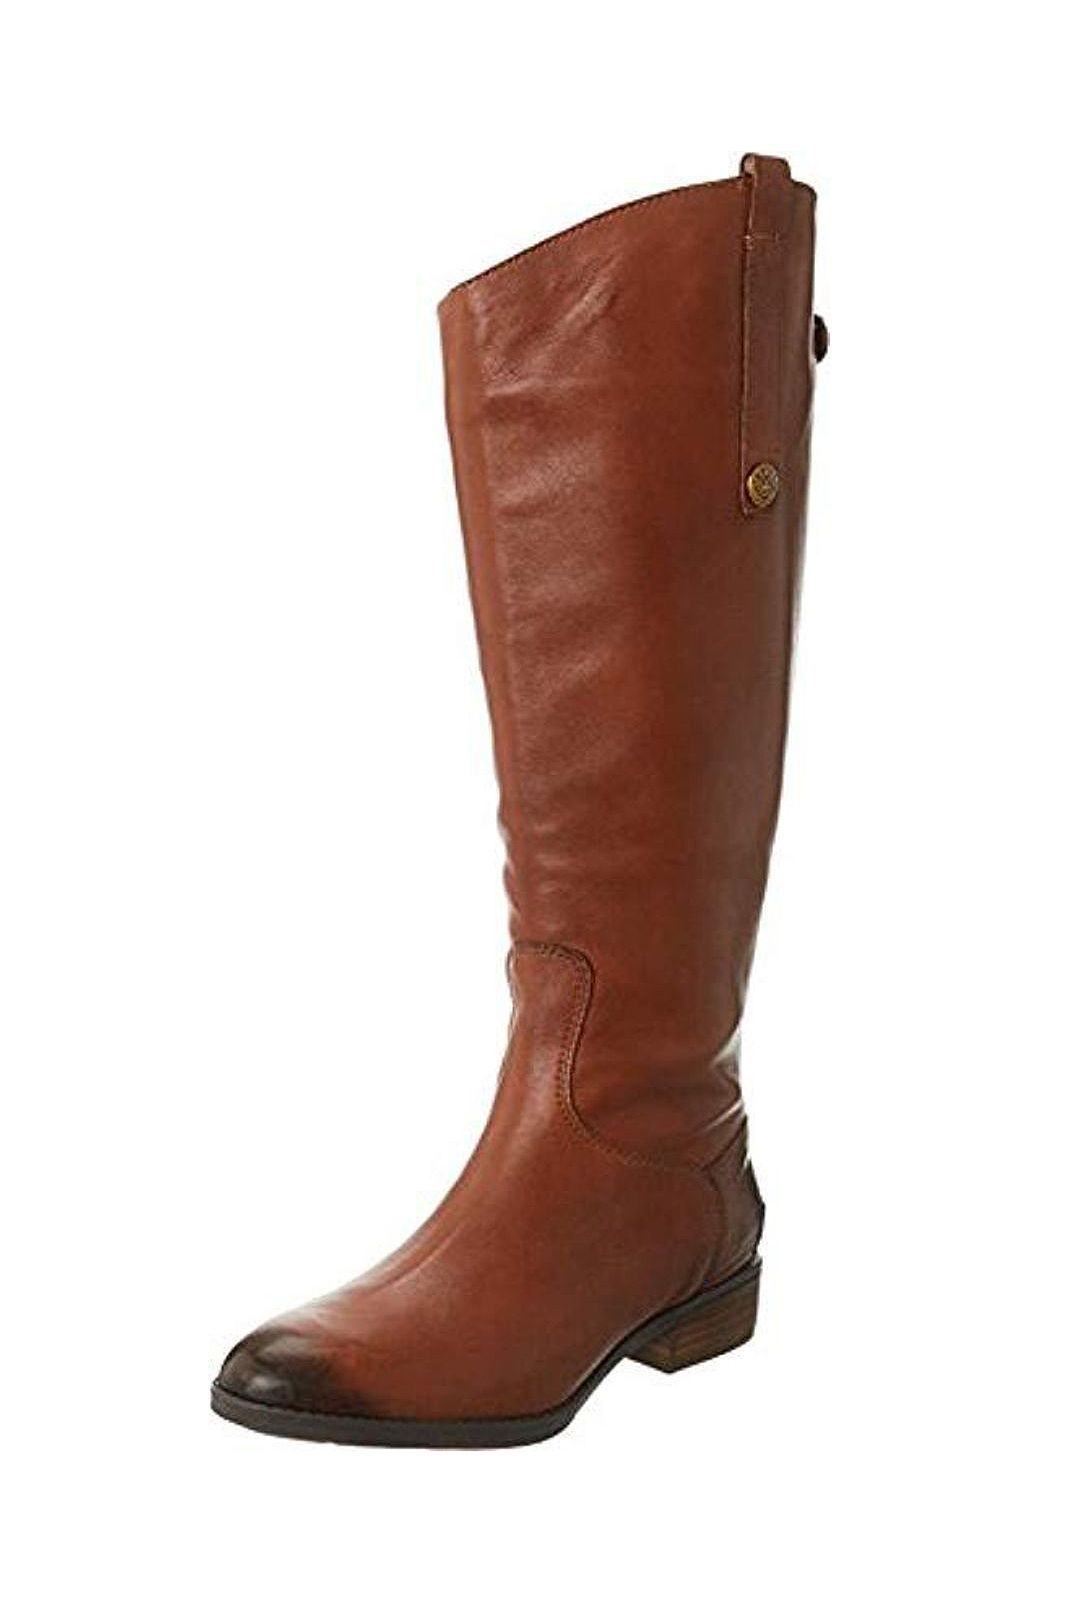 women's boots sale amazon